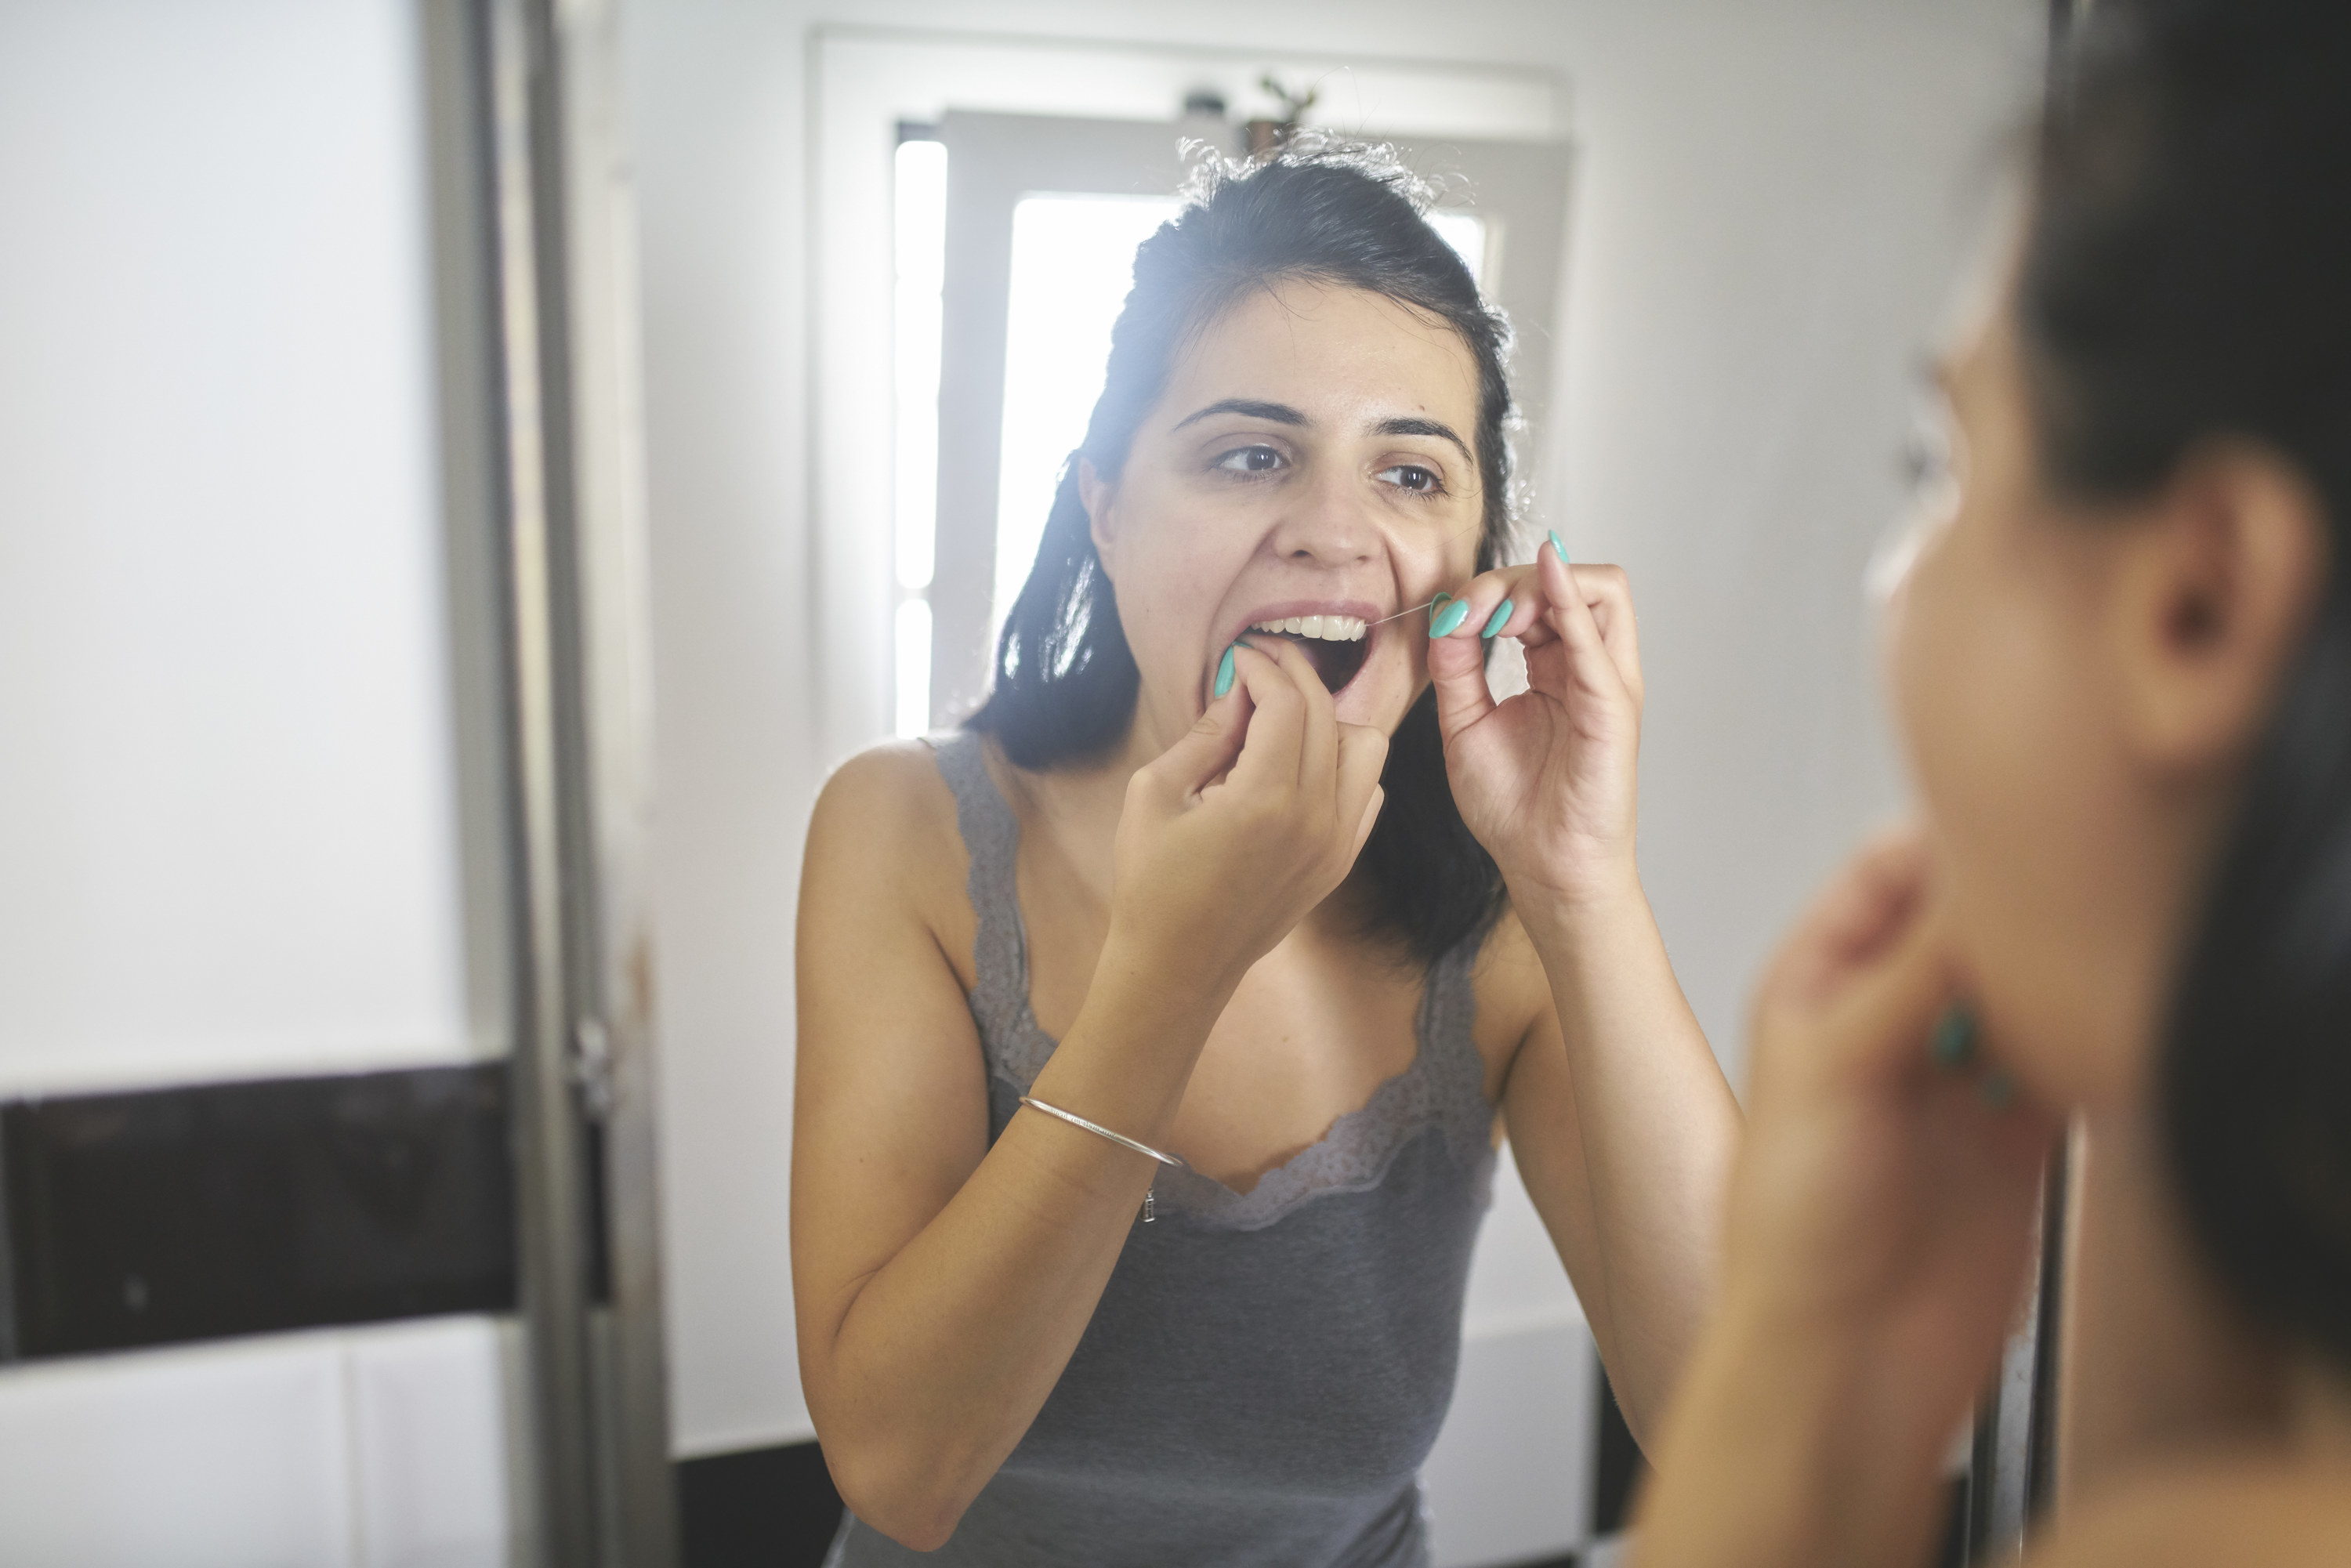 a woman flossing her teeth in a bathroom mirror